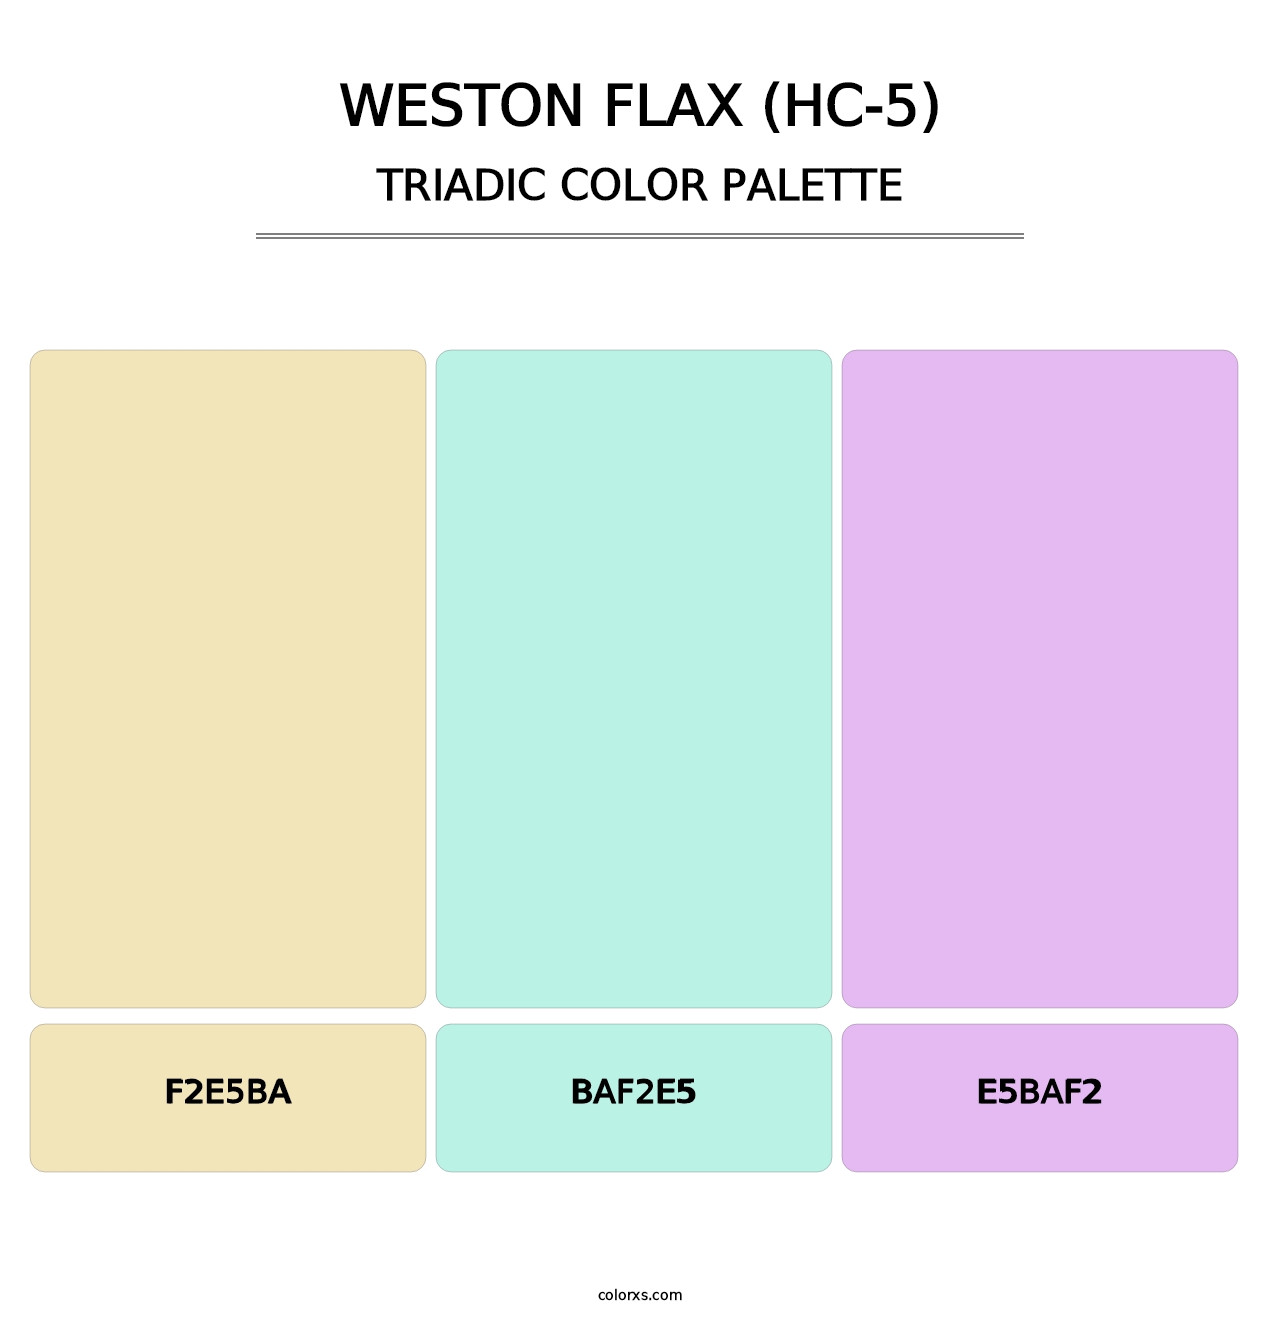 Weston Flax (HC-5) - Triadic Color Palette